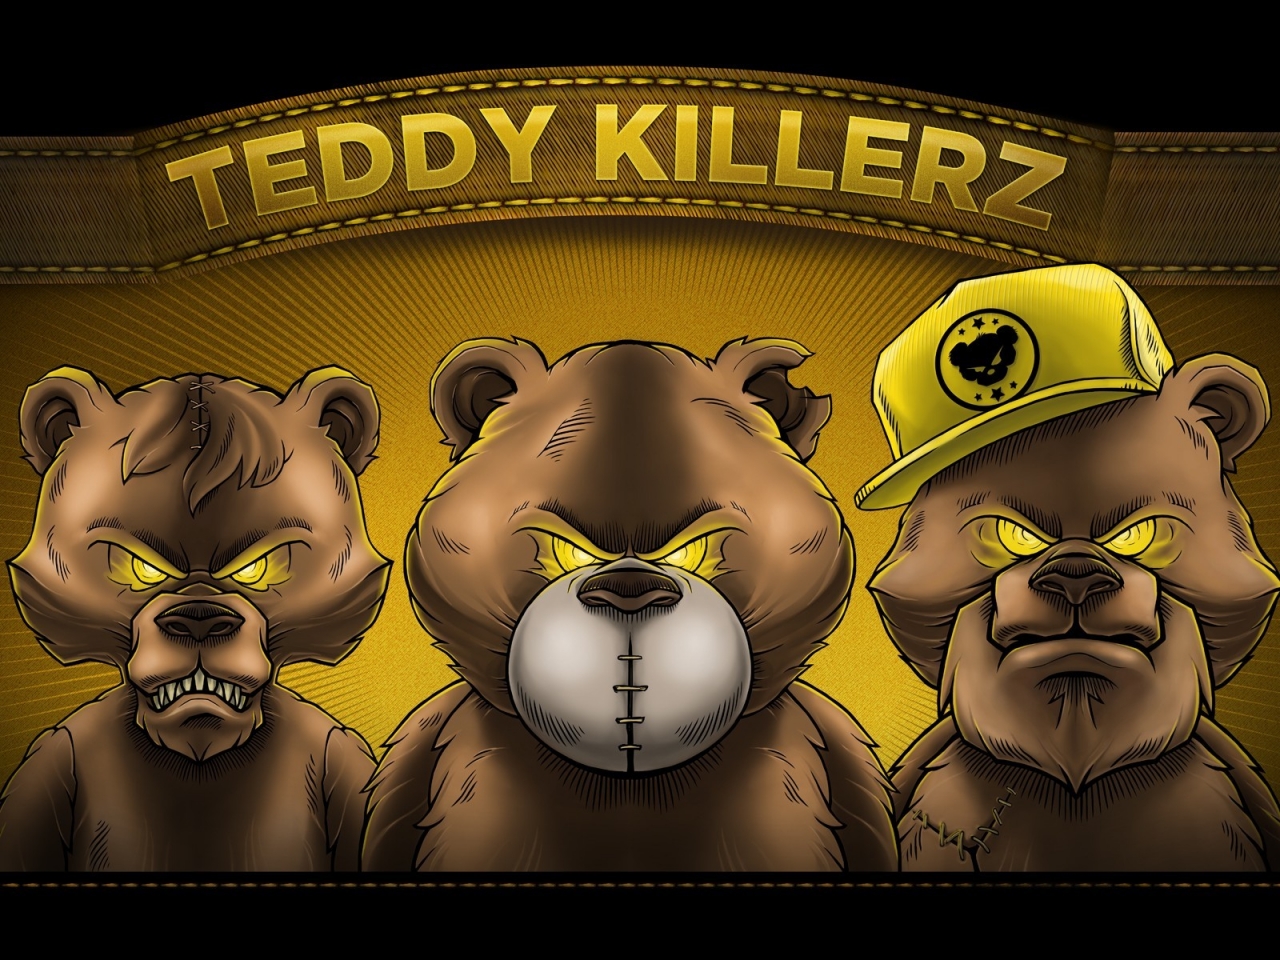 Teddy Killerz Poster for 1280 x 960 resolution